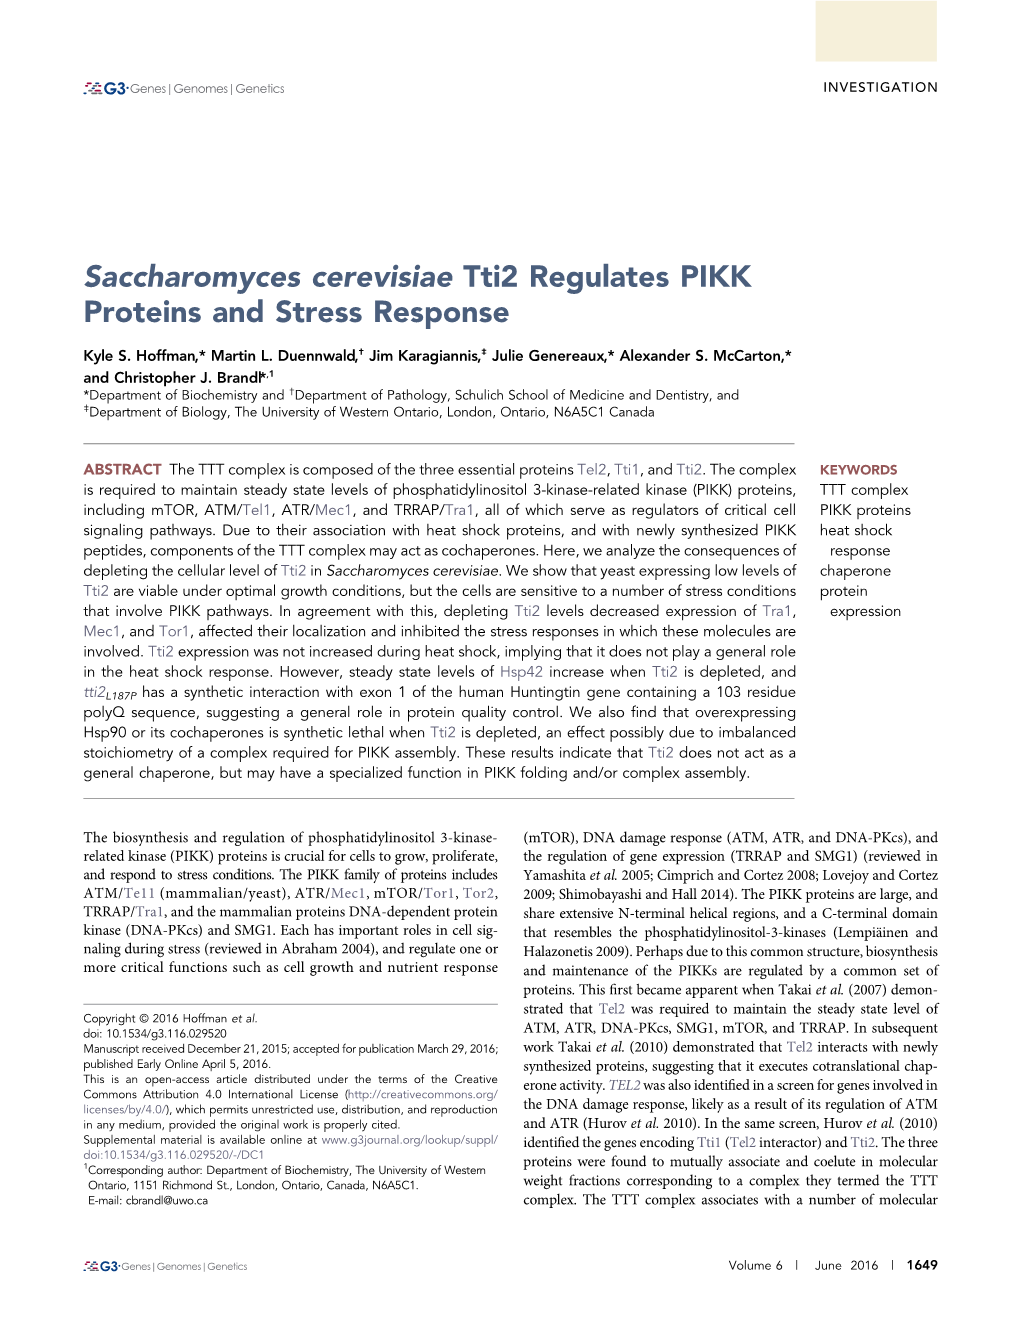 Saccharomyces Cerevisiae Tti2 Regulates PIKK Proteins and Stress Response